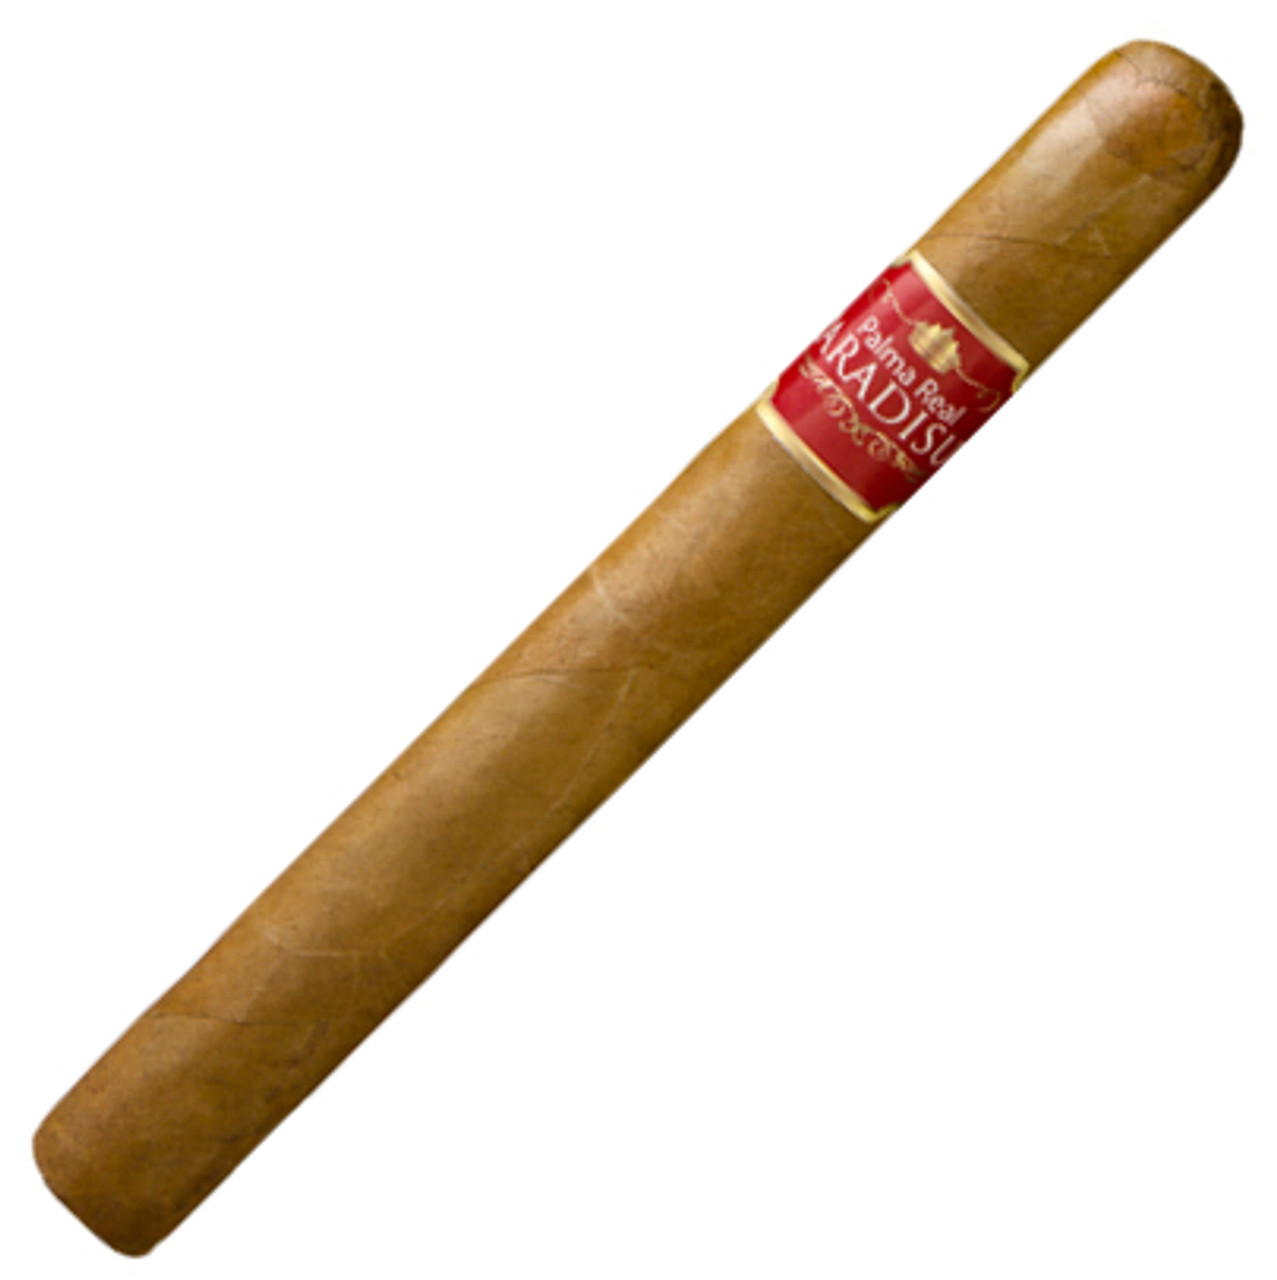 Palma Real Paradisus Churchill Cigars - 7 x 50 (Box of 20)